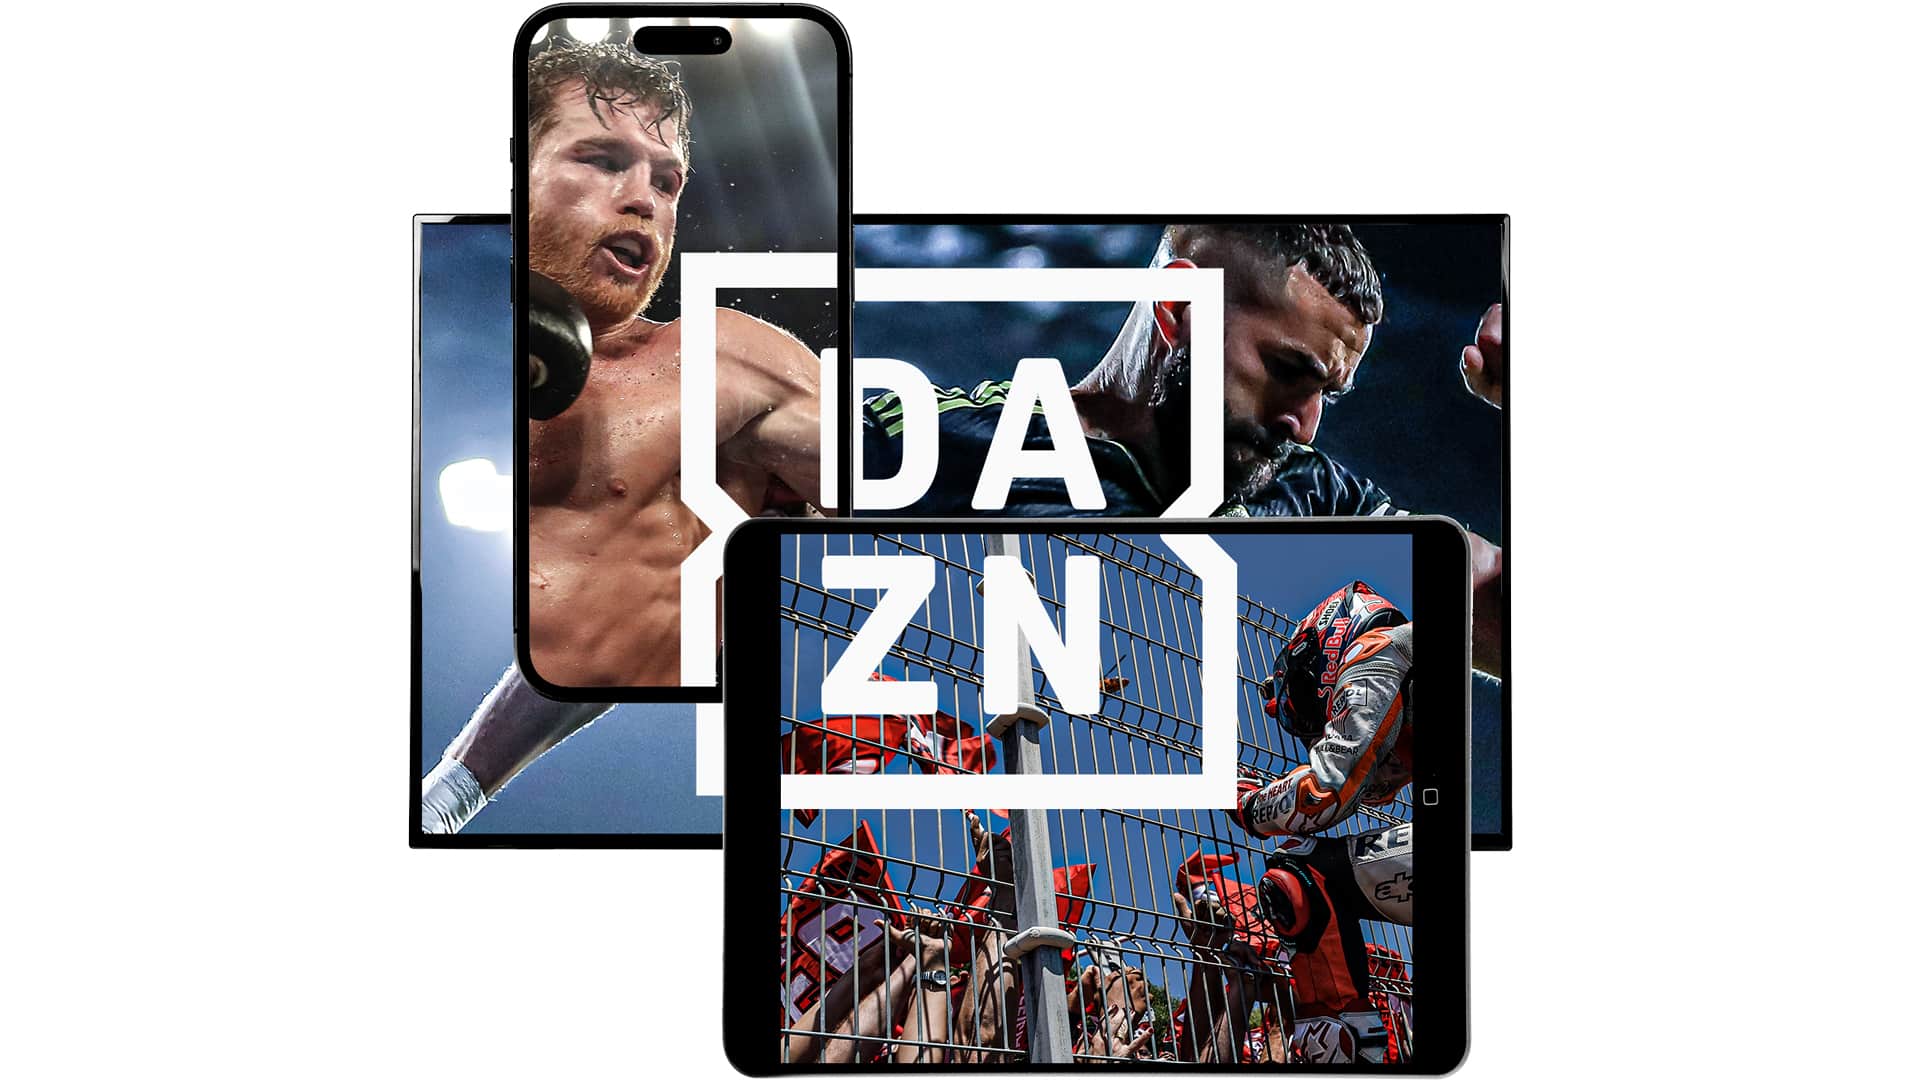 DAZN becomes Europes “biggest digital sports broadcaster”